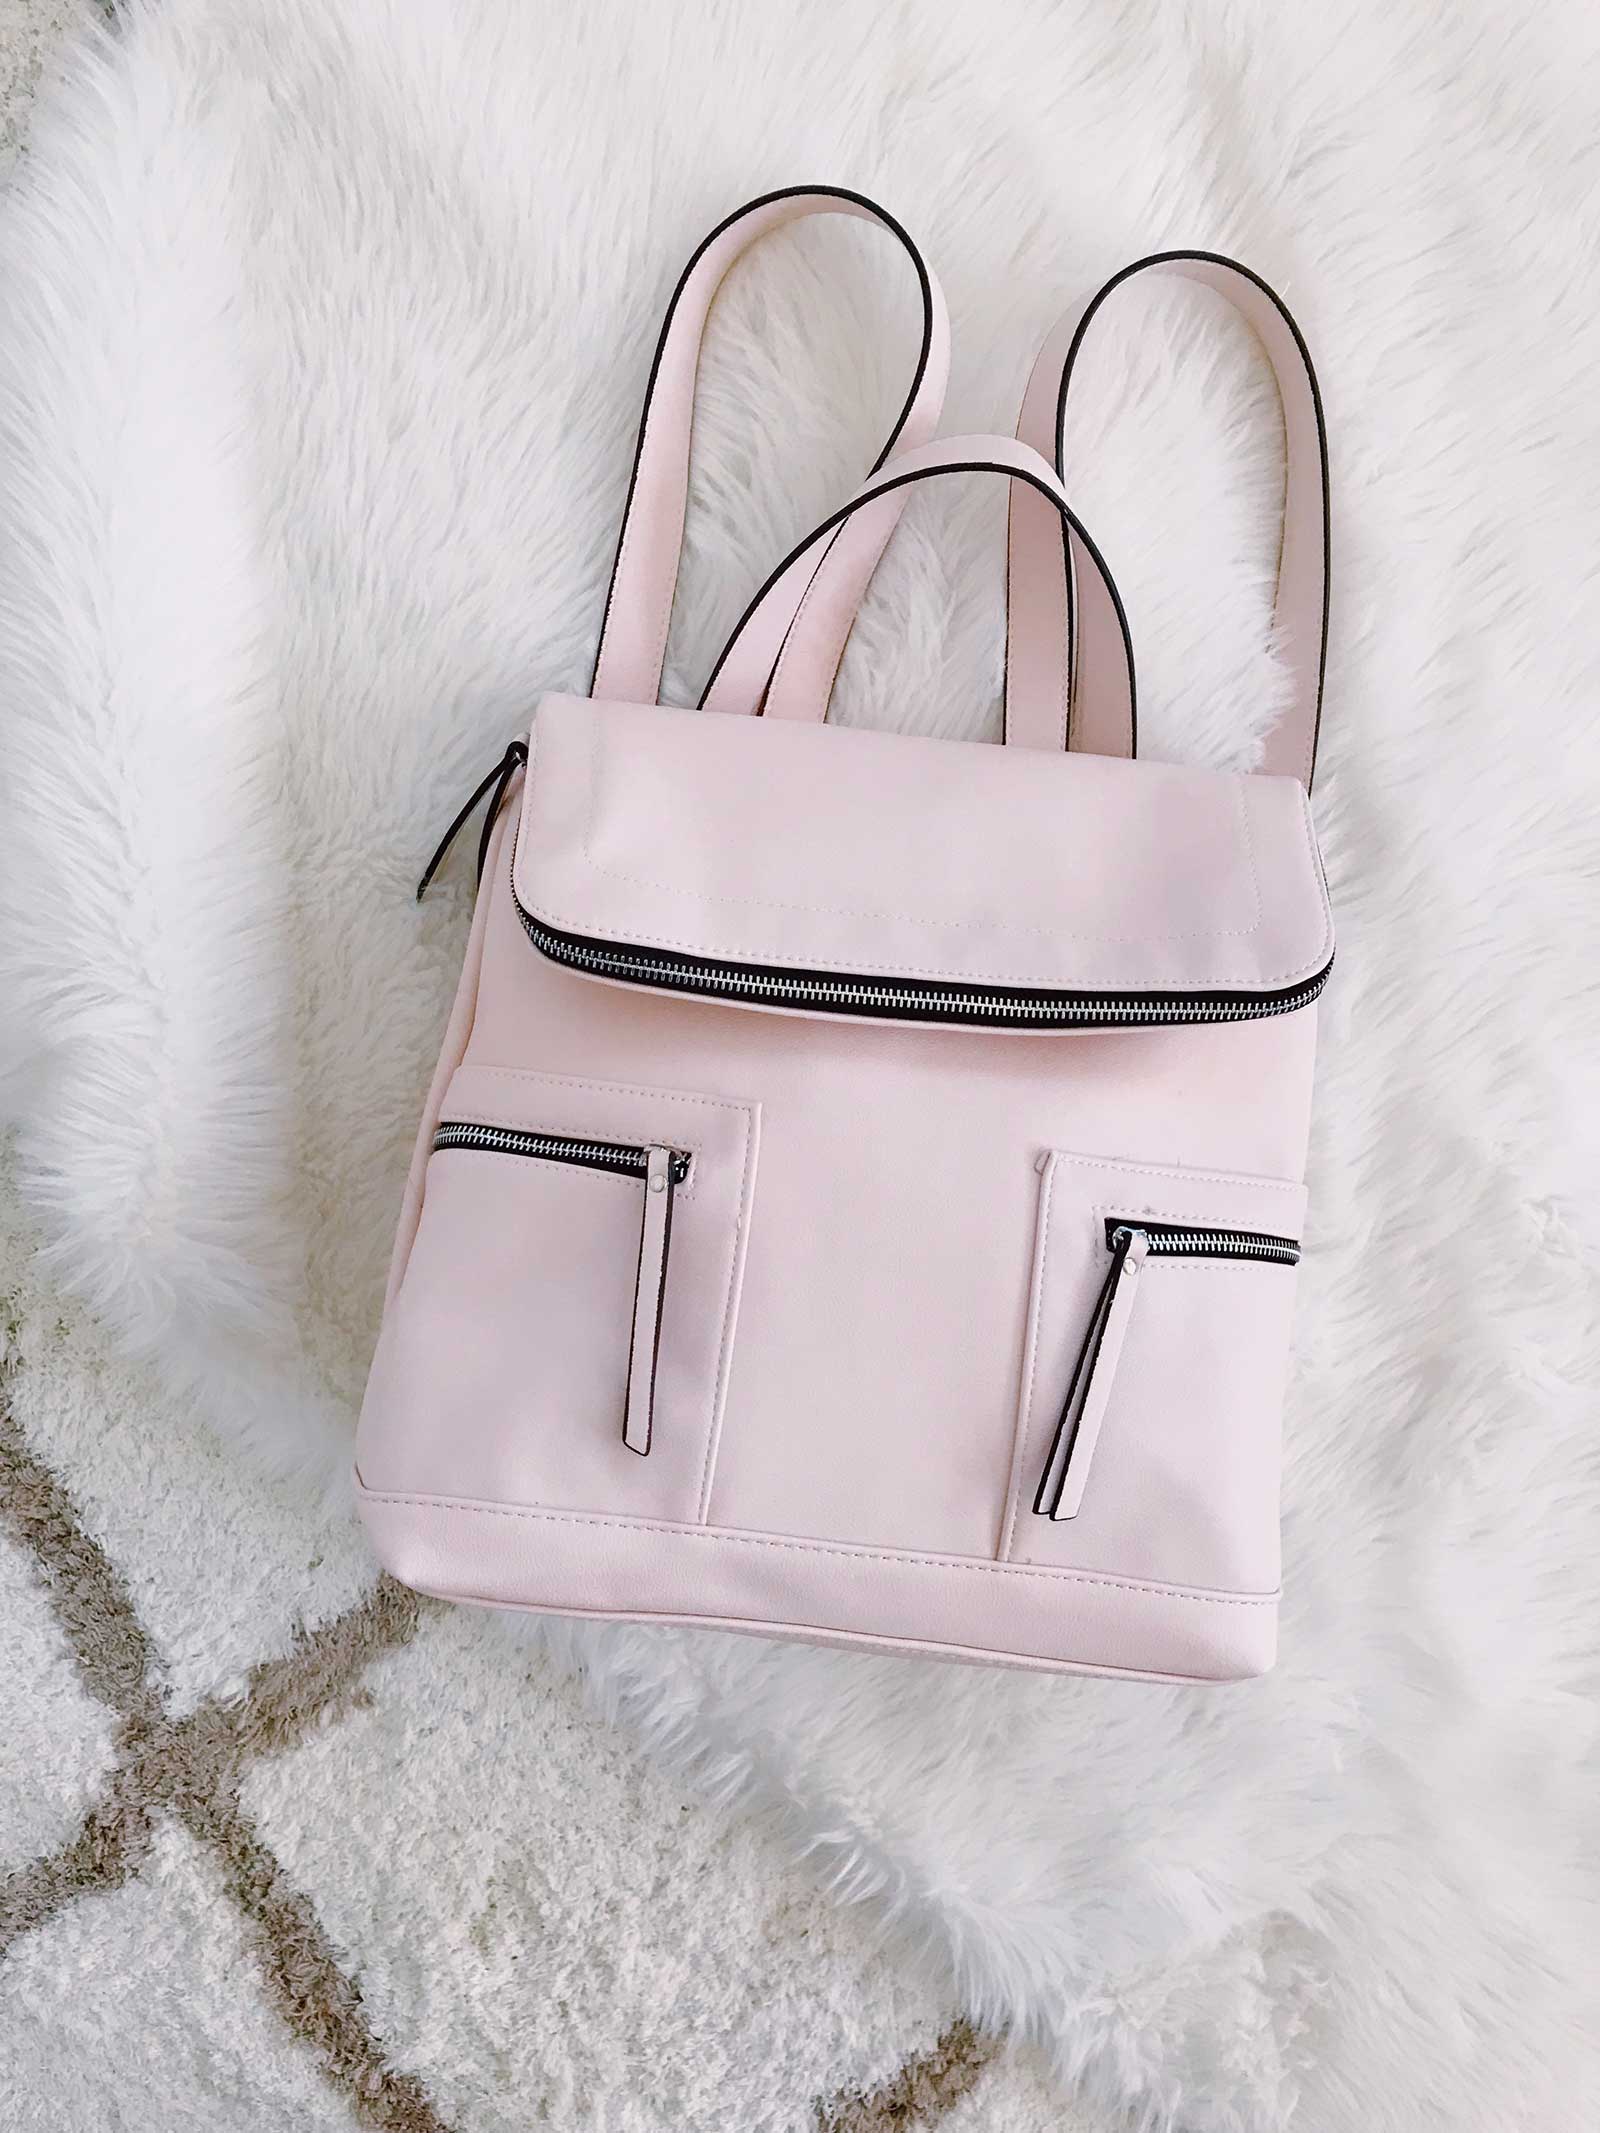 Target weekender bag in blush pink - need this for my next trip